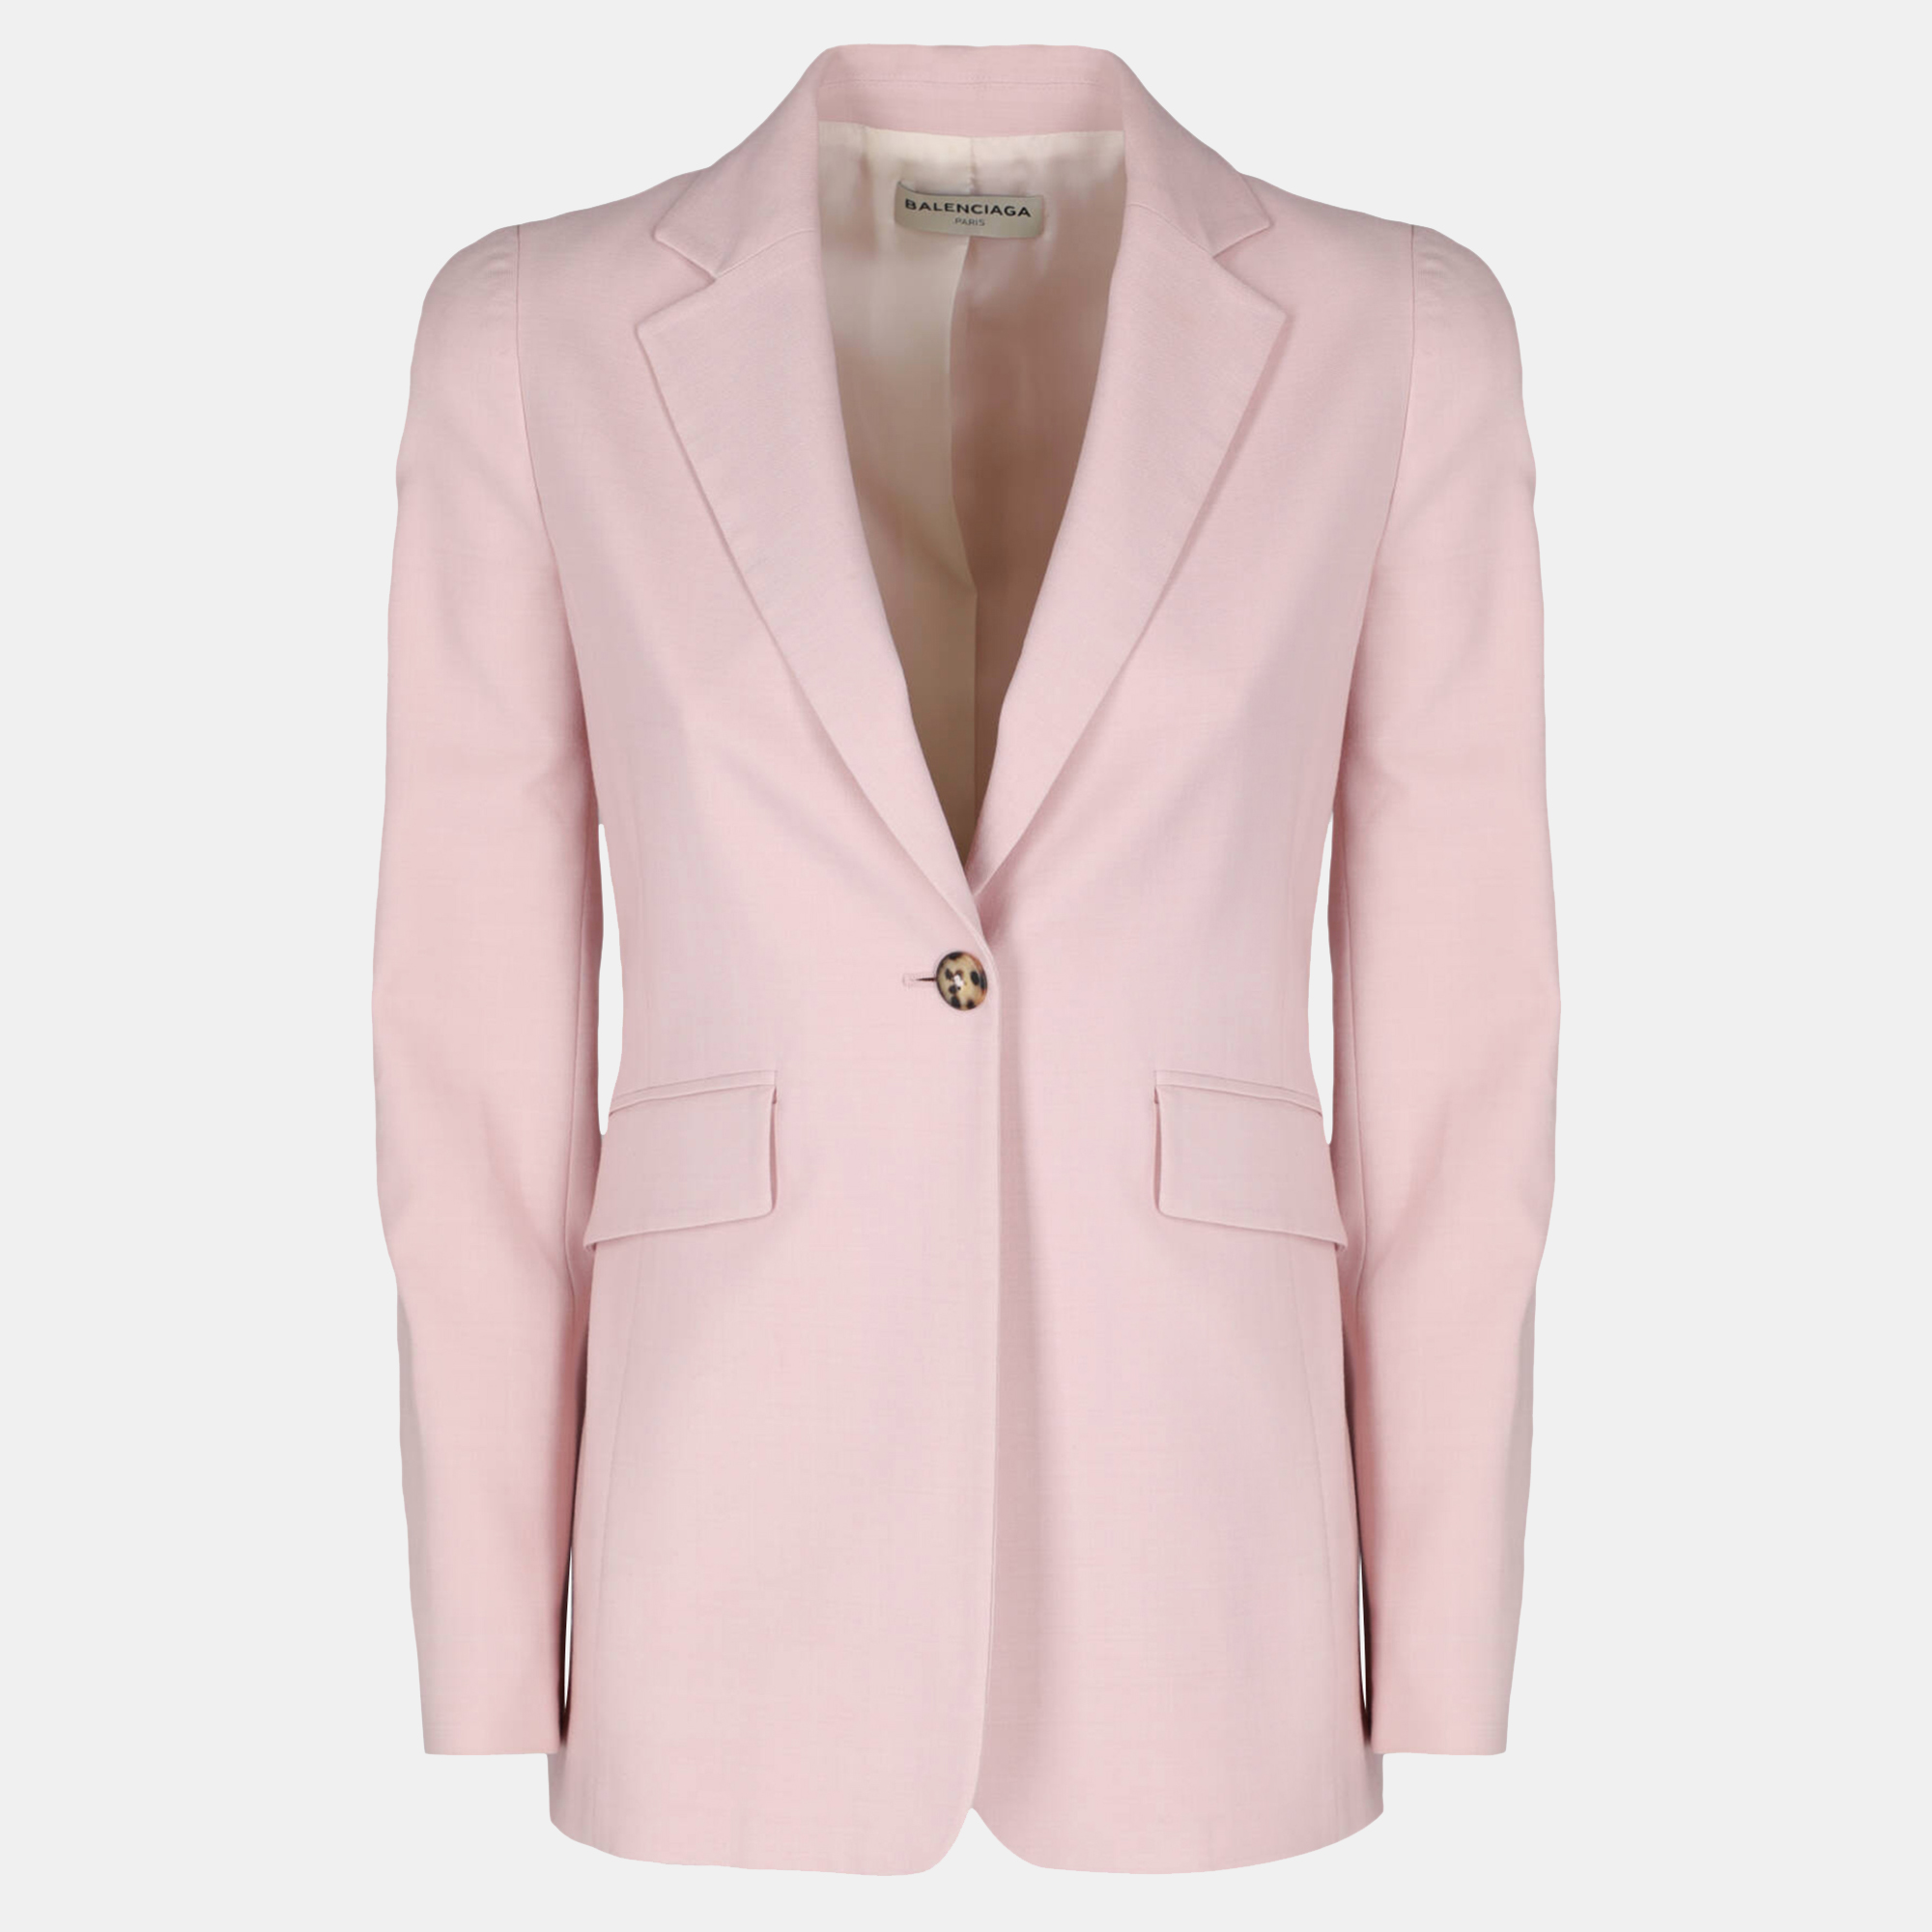 Balenciaga  Women's Fabric Blazer - Pink - XS